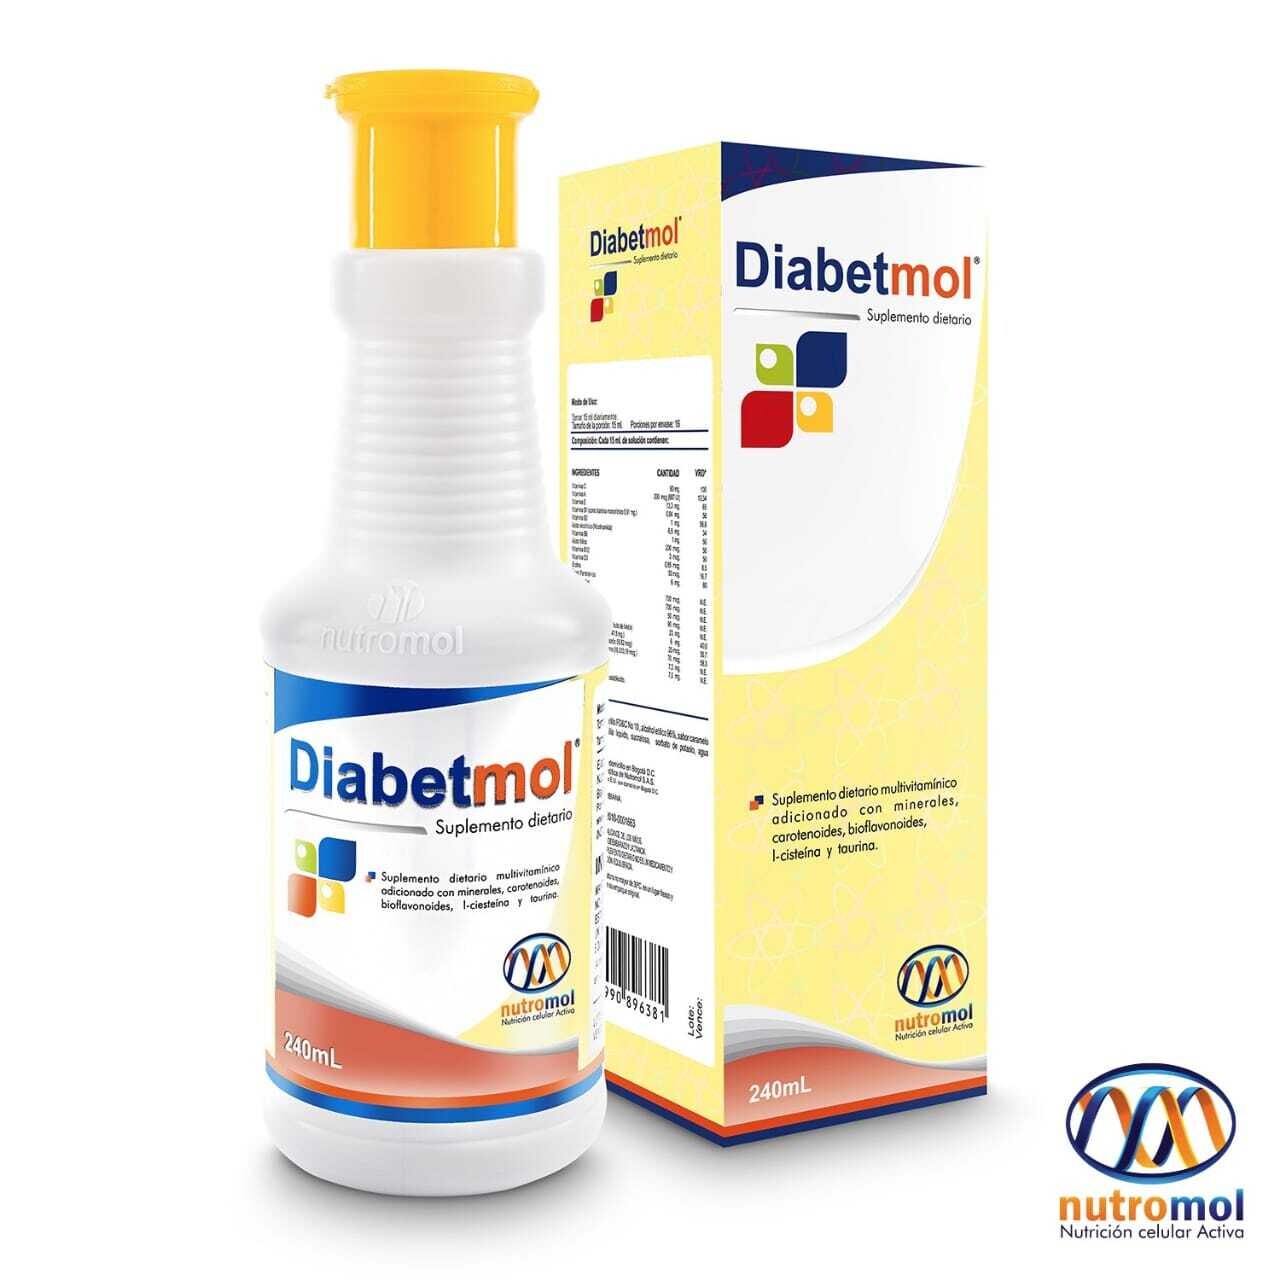 Diabetmol